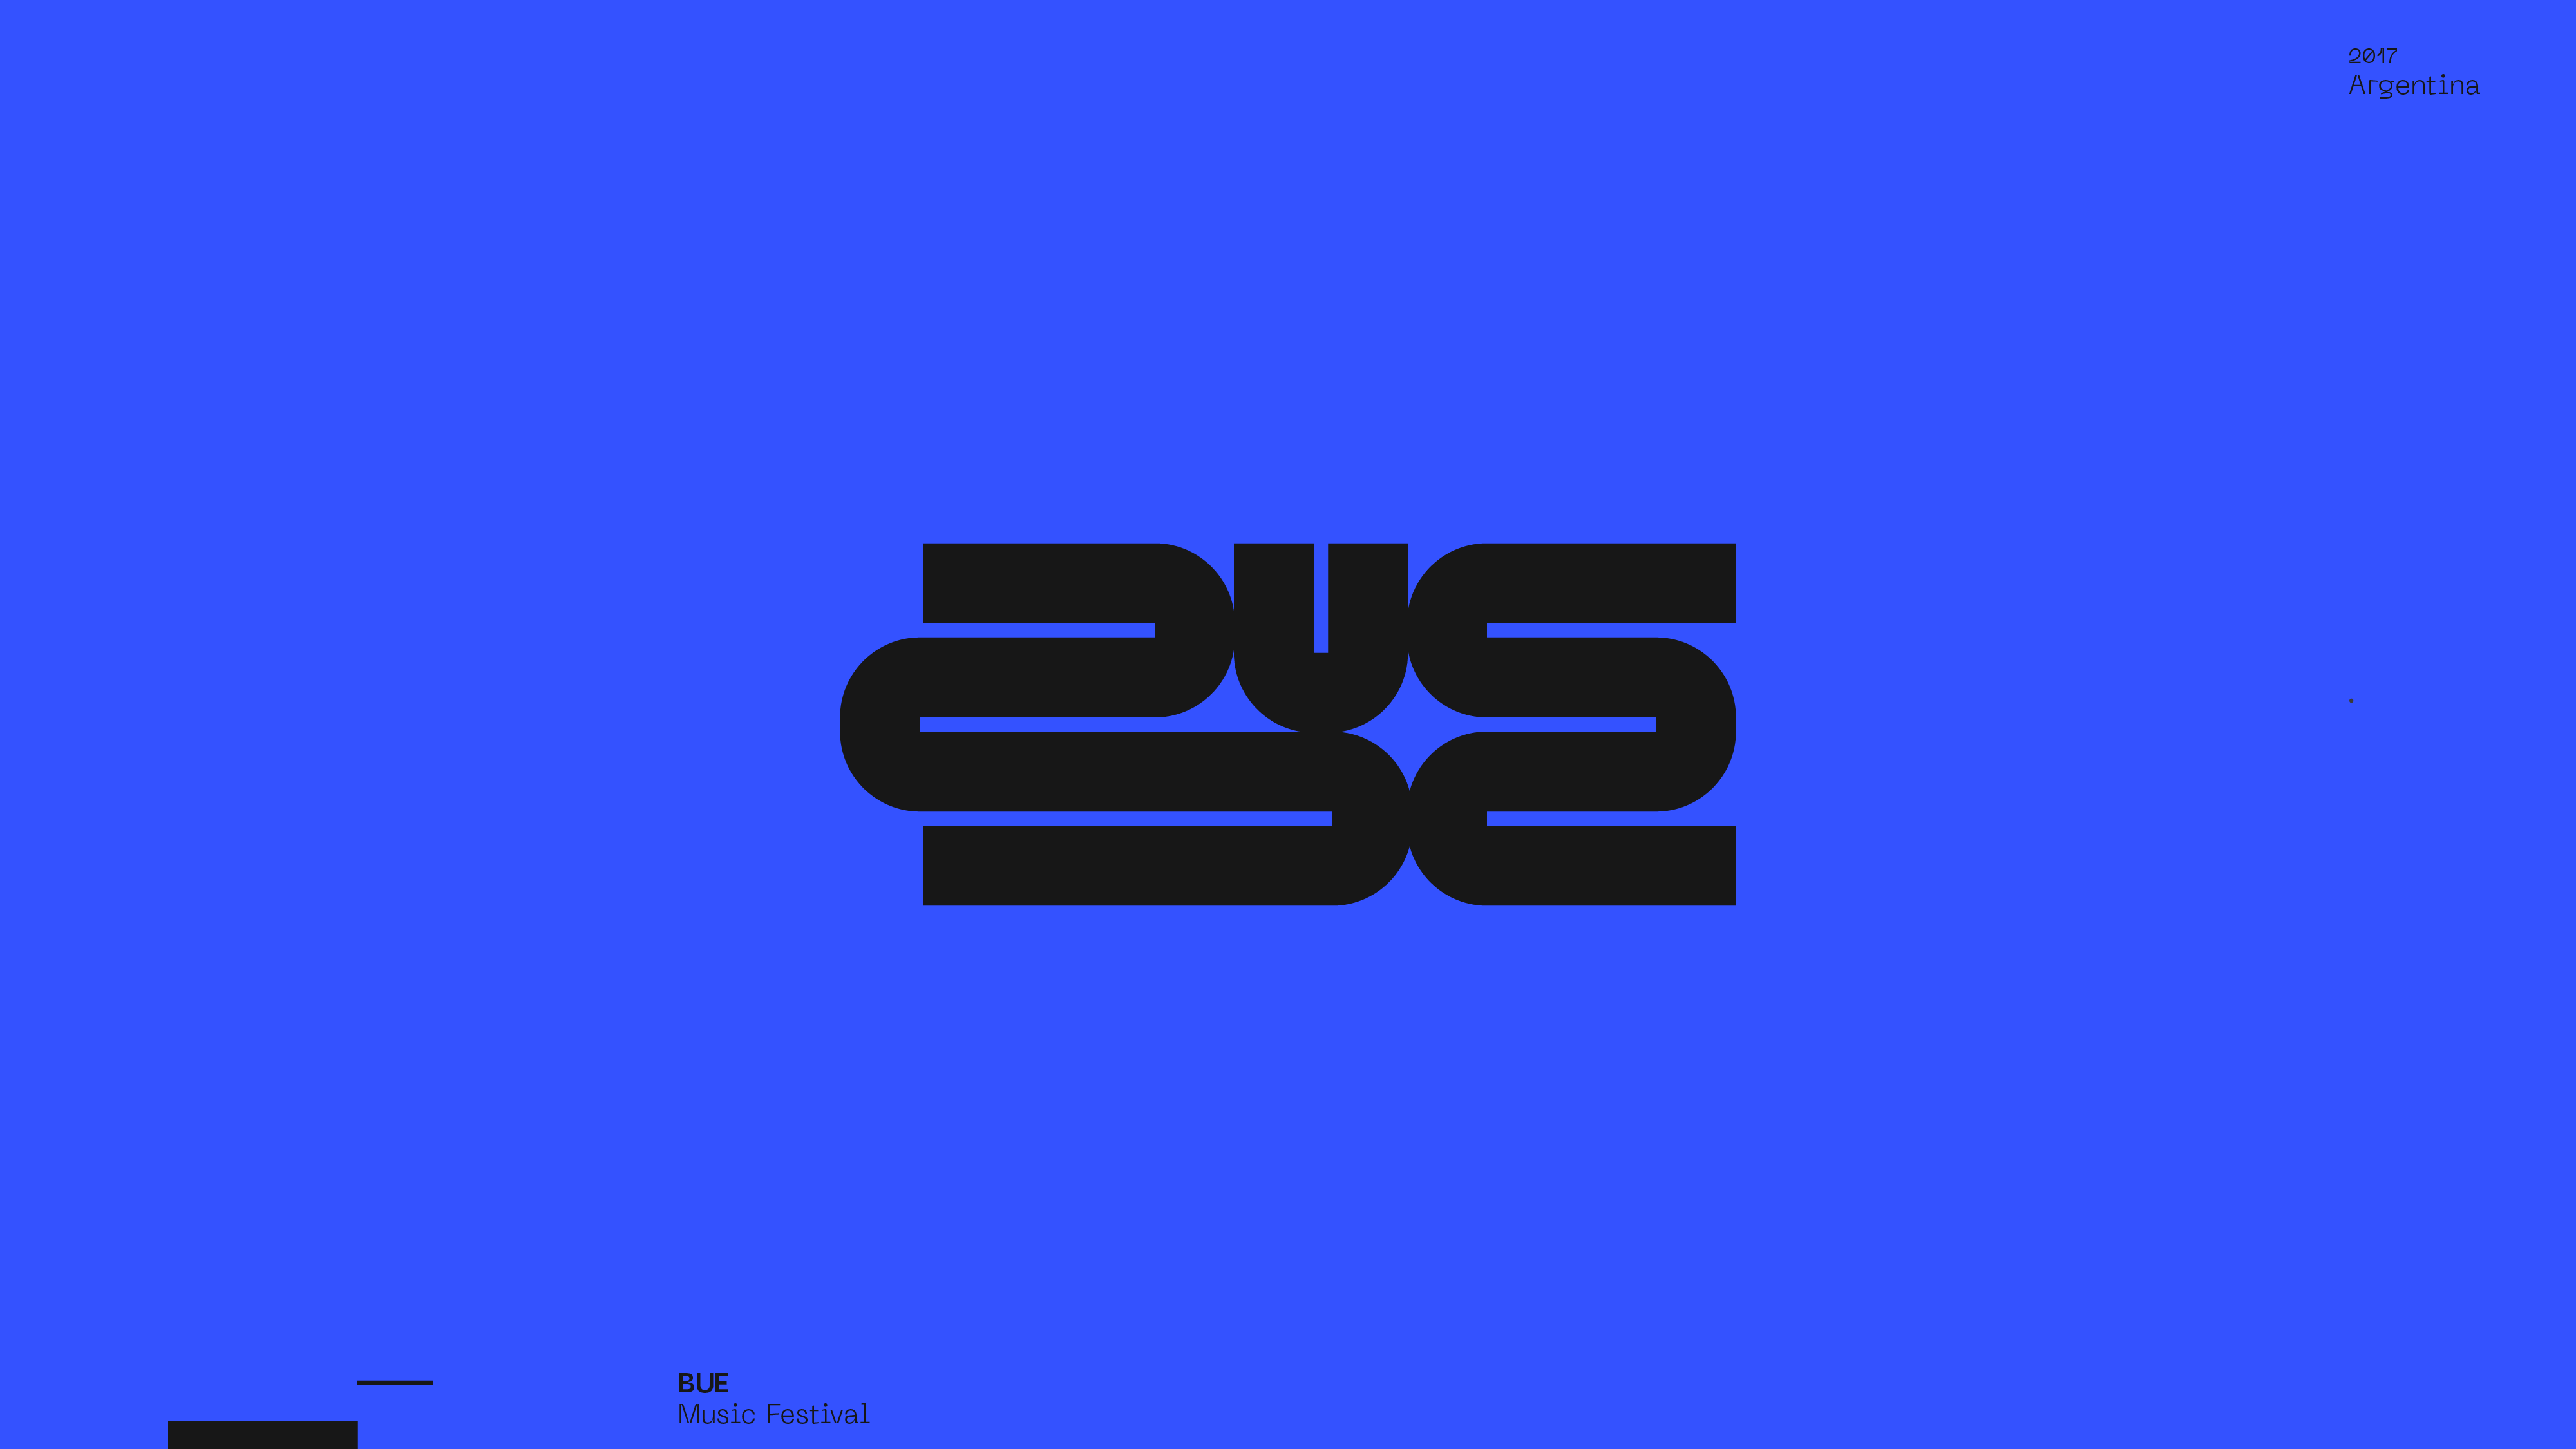 Guapo Design Studio by Esteban Ibarra Logofolio 2017 2018 logo designer — BUE